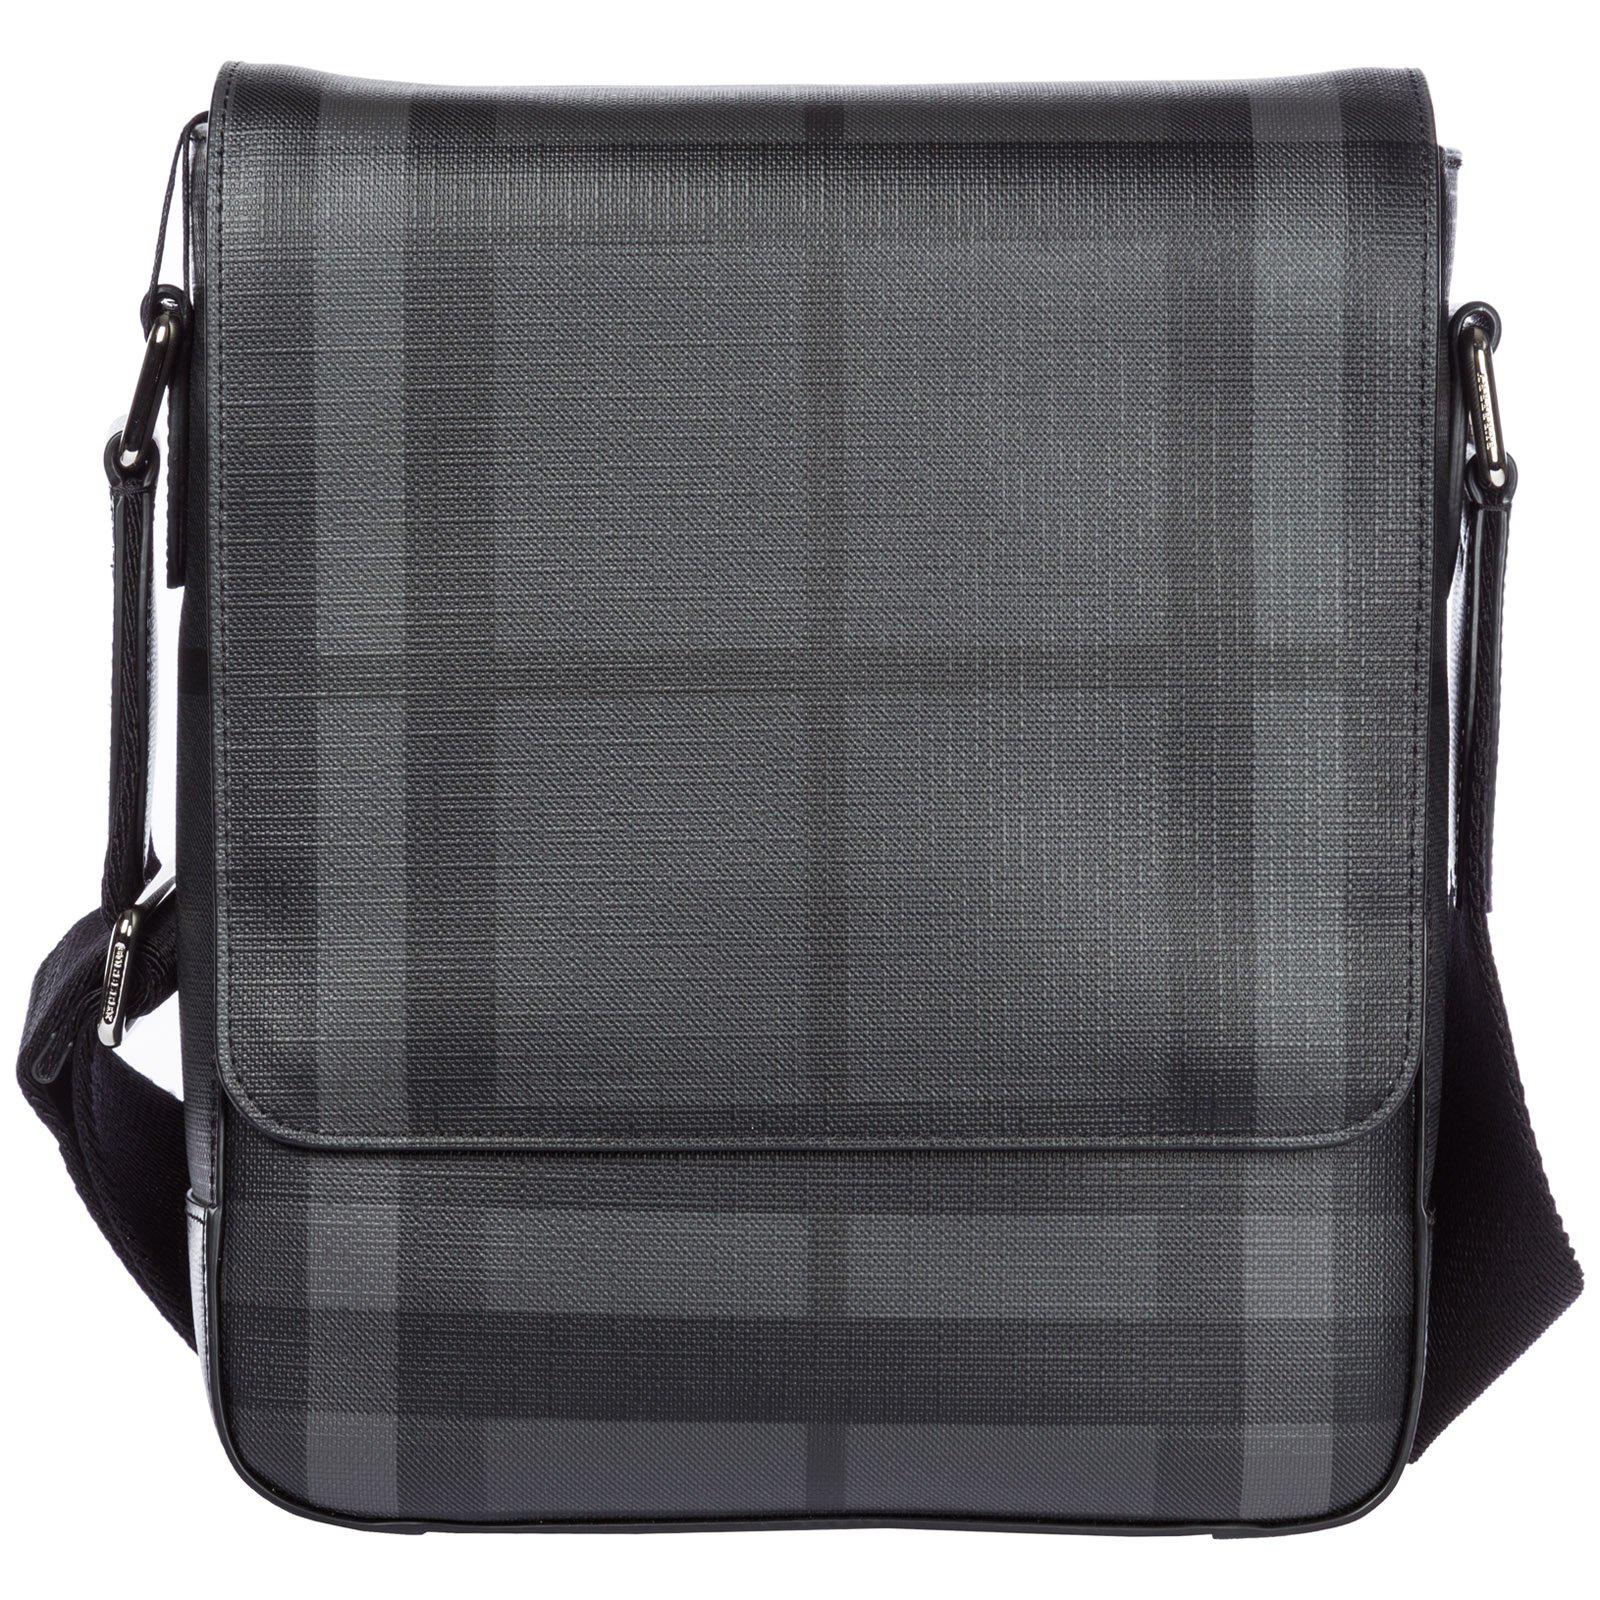 Burberry London Check Crossbody Bag in Charcoal/Black (Black) for Men - Lyst